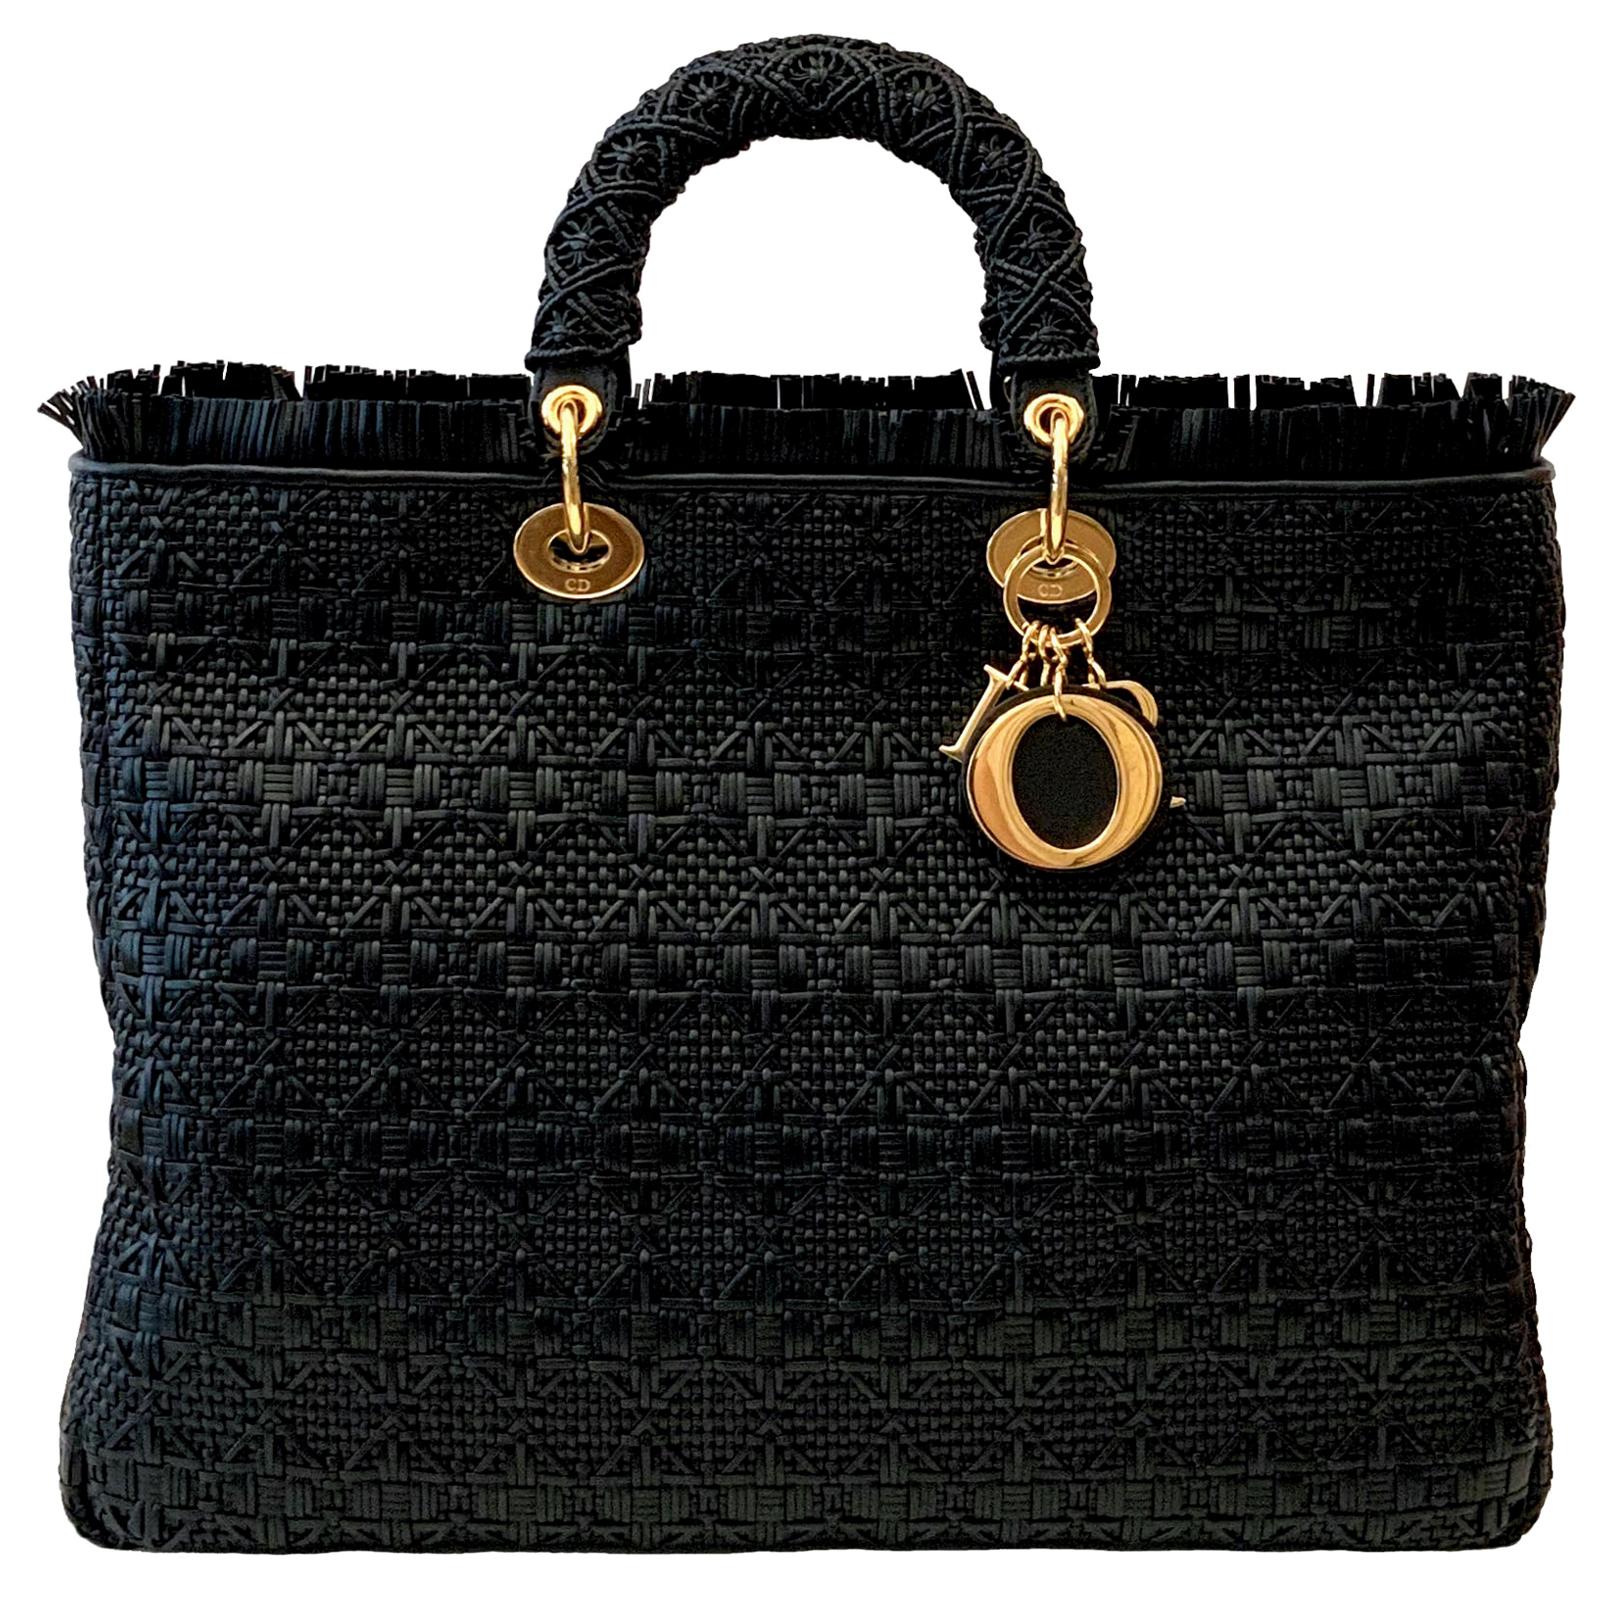 Lady Dior Art Bags - 6 For Sale on 1stDibs | lady dior art bag 